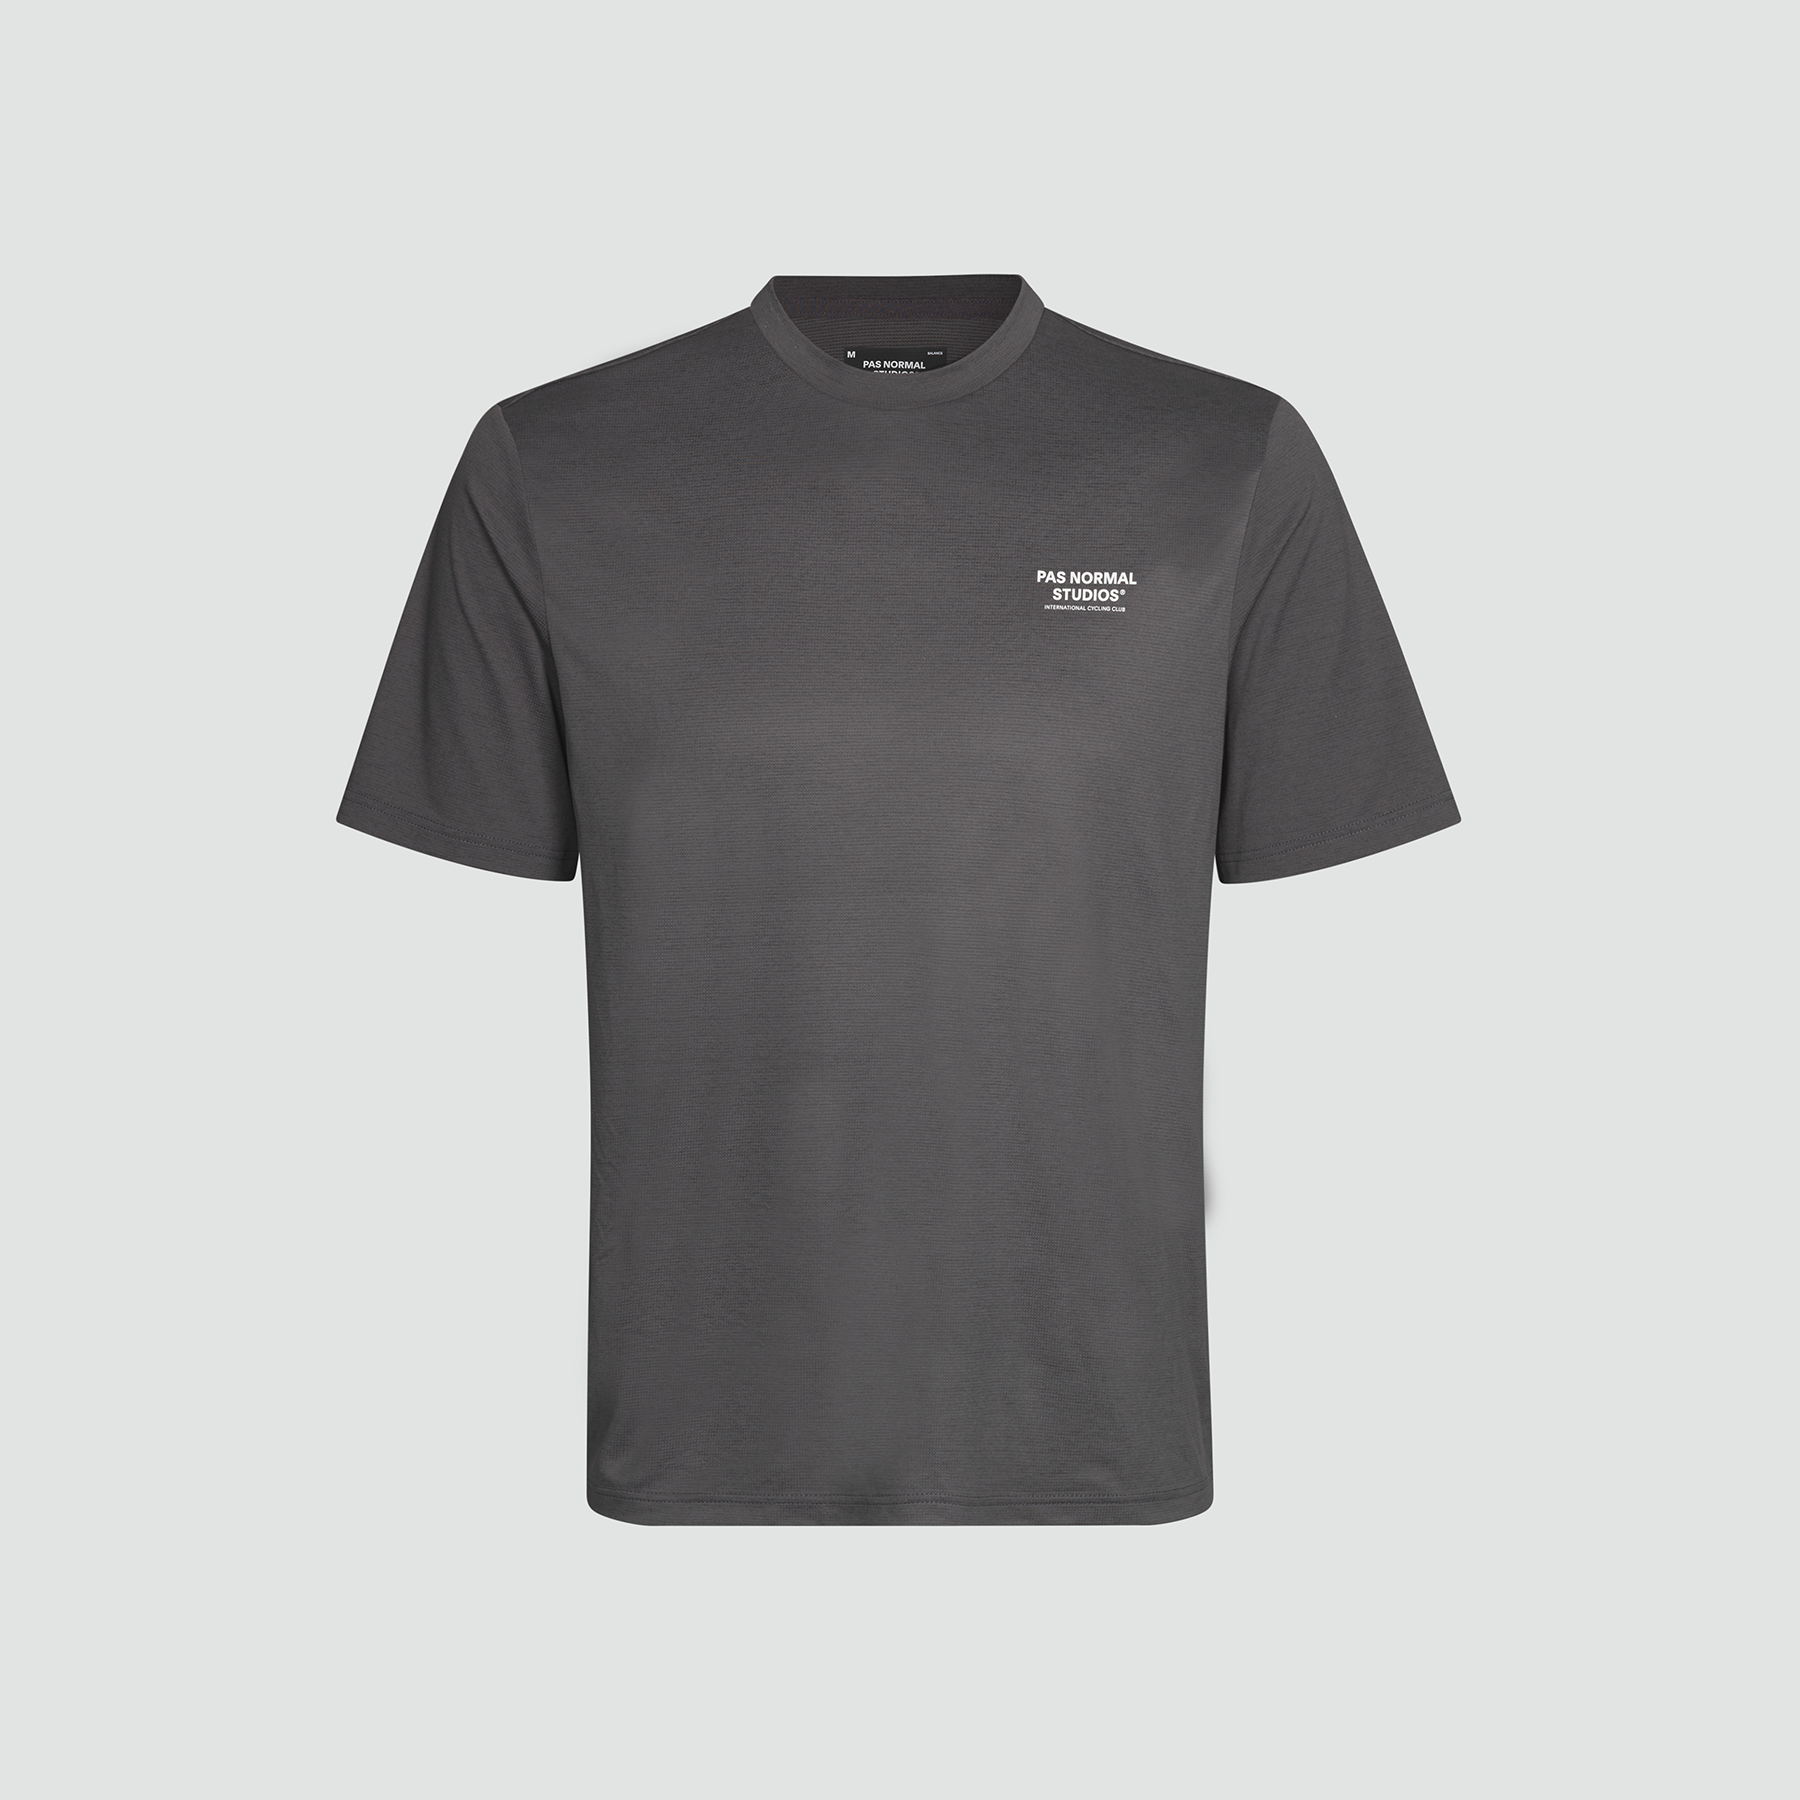 Balance T-shirt - Stone Grey